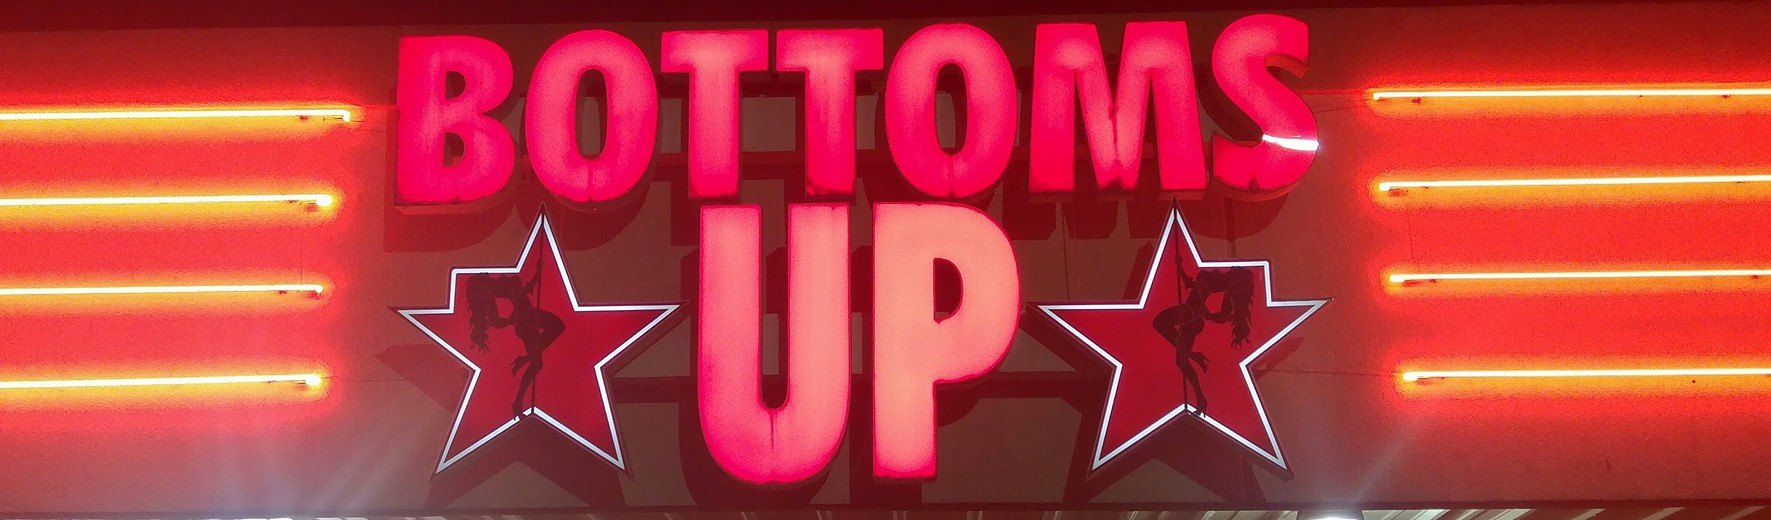 Bottom's Up💢TOPLESS STRIP CLUB